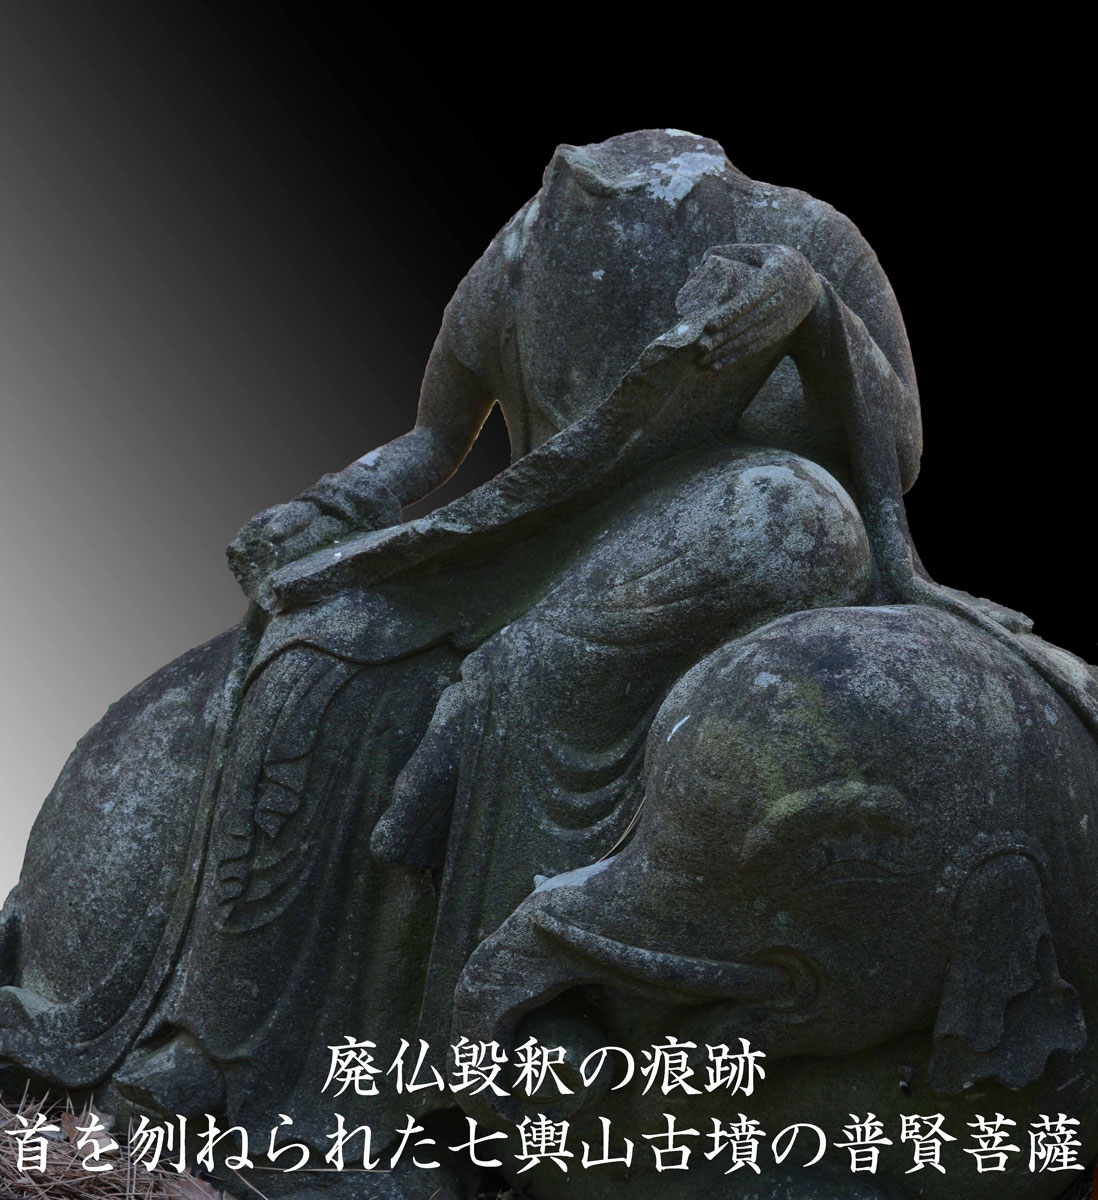 Traces of the abolition of Buddhism. Nanakoshiyama burial mound's Fugen-Bodhisattova who was decapitated.